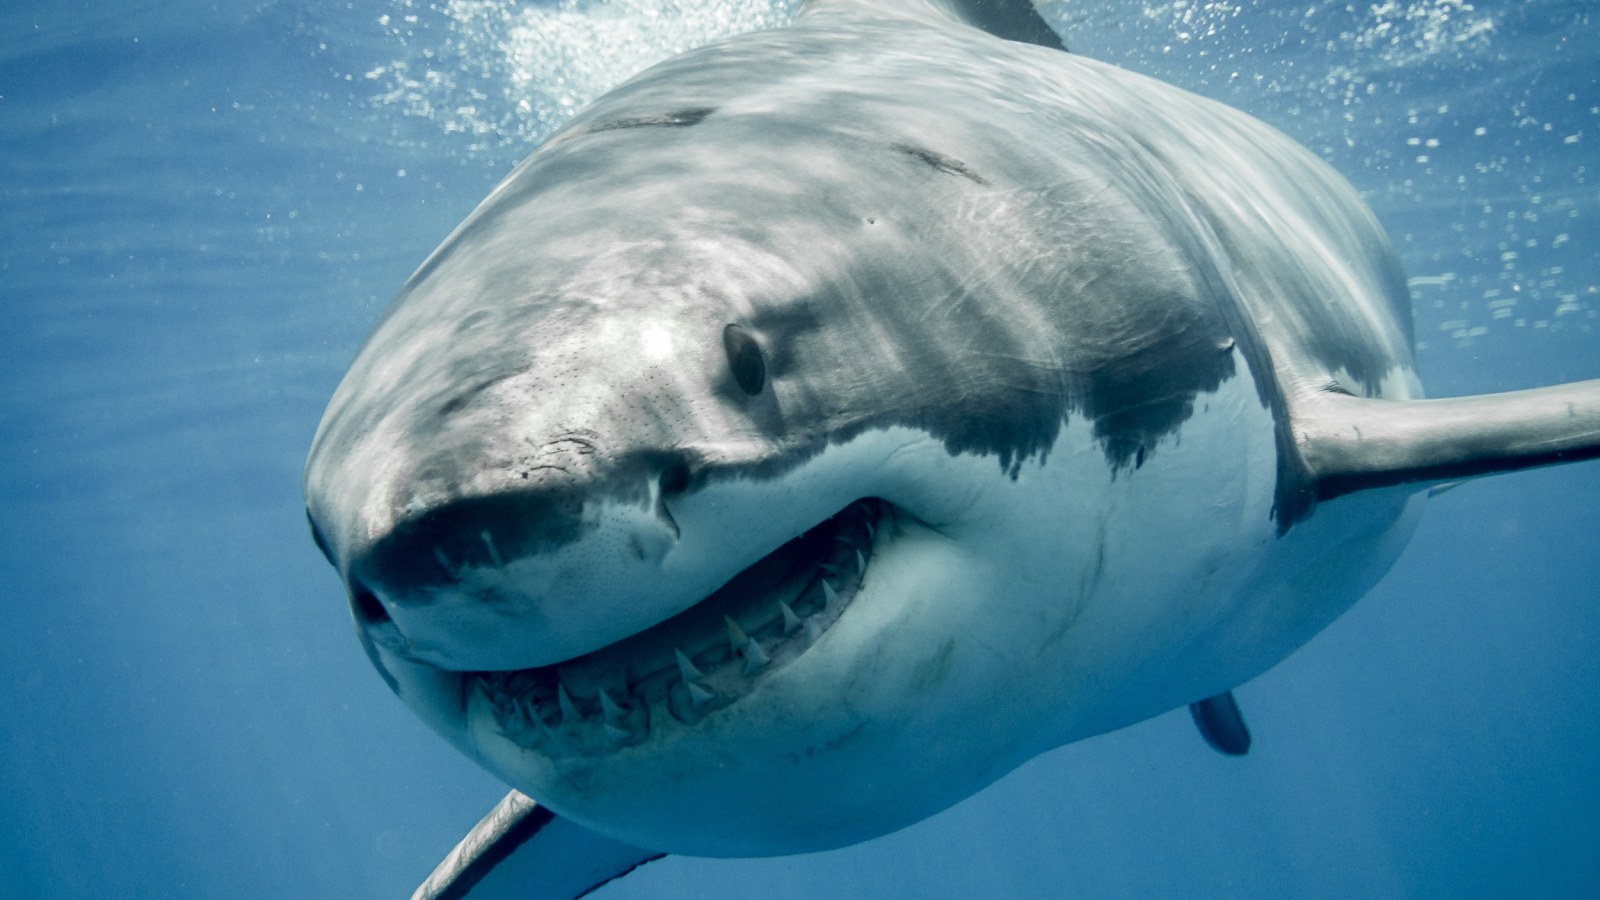 https://d.newsweek.com/en/full/2193035/great-white-shark.jpg?w=1600&h=900&q=88&f=2cb9e0b41f359bb6e4db9a7b8472212c